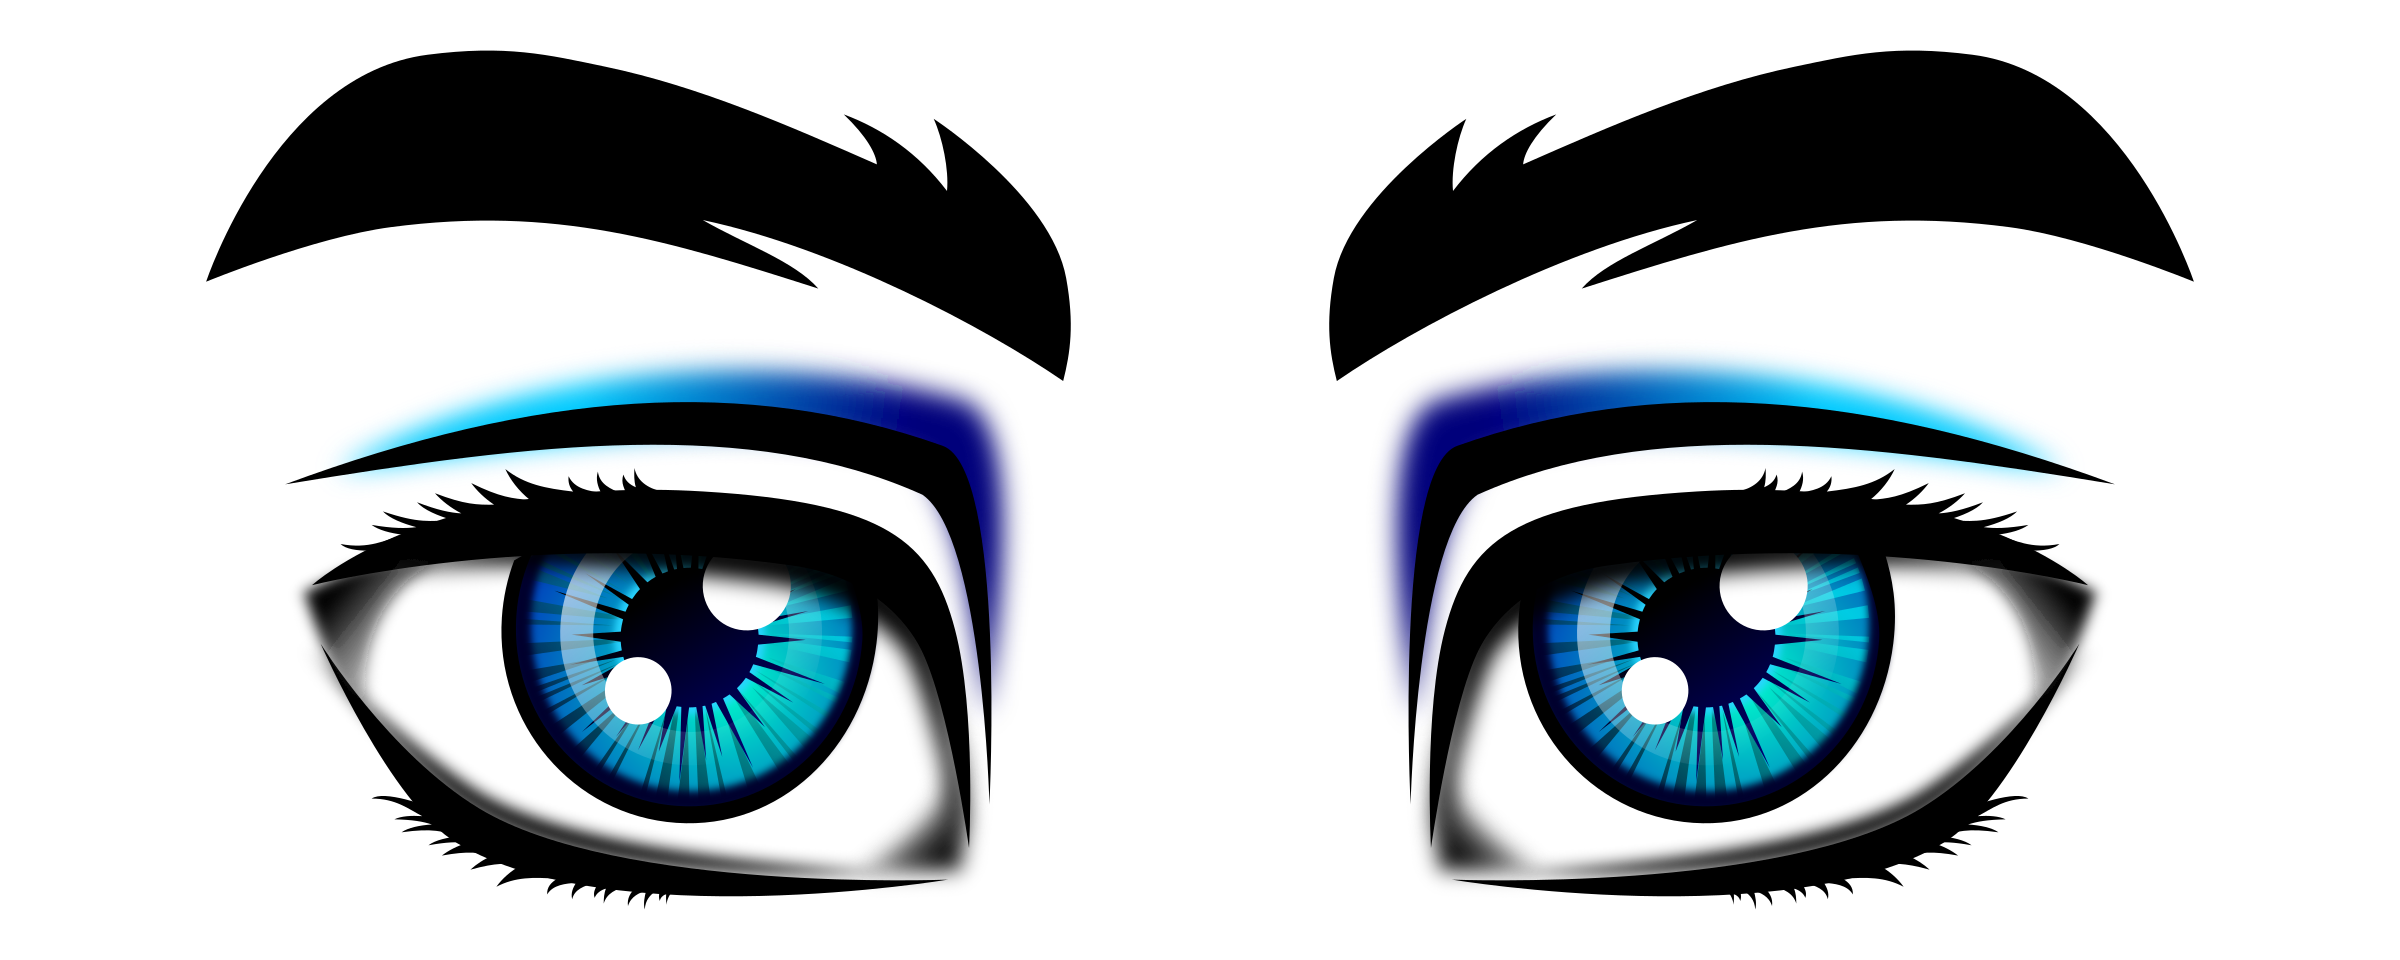 Eyes PNG Transparent Image